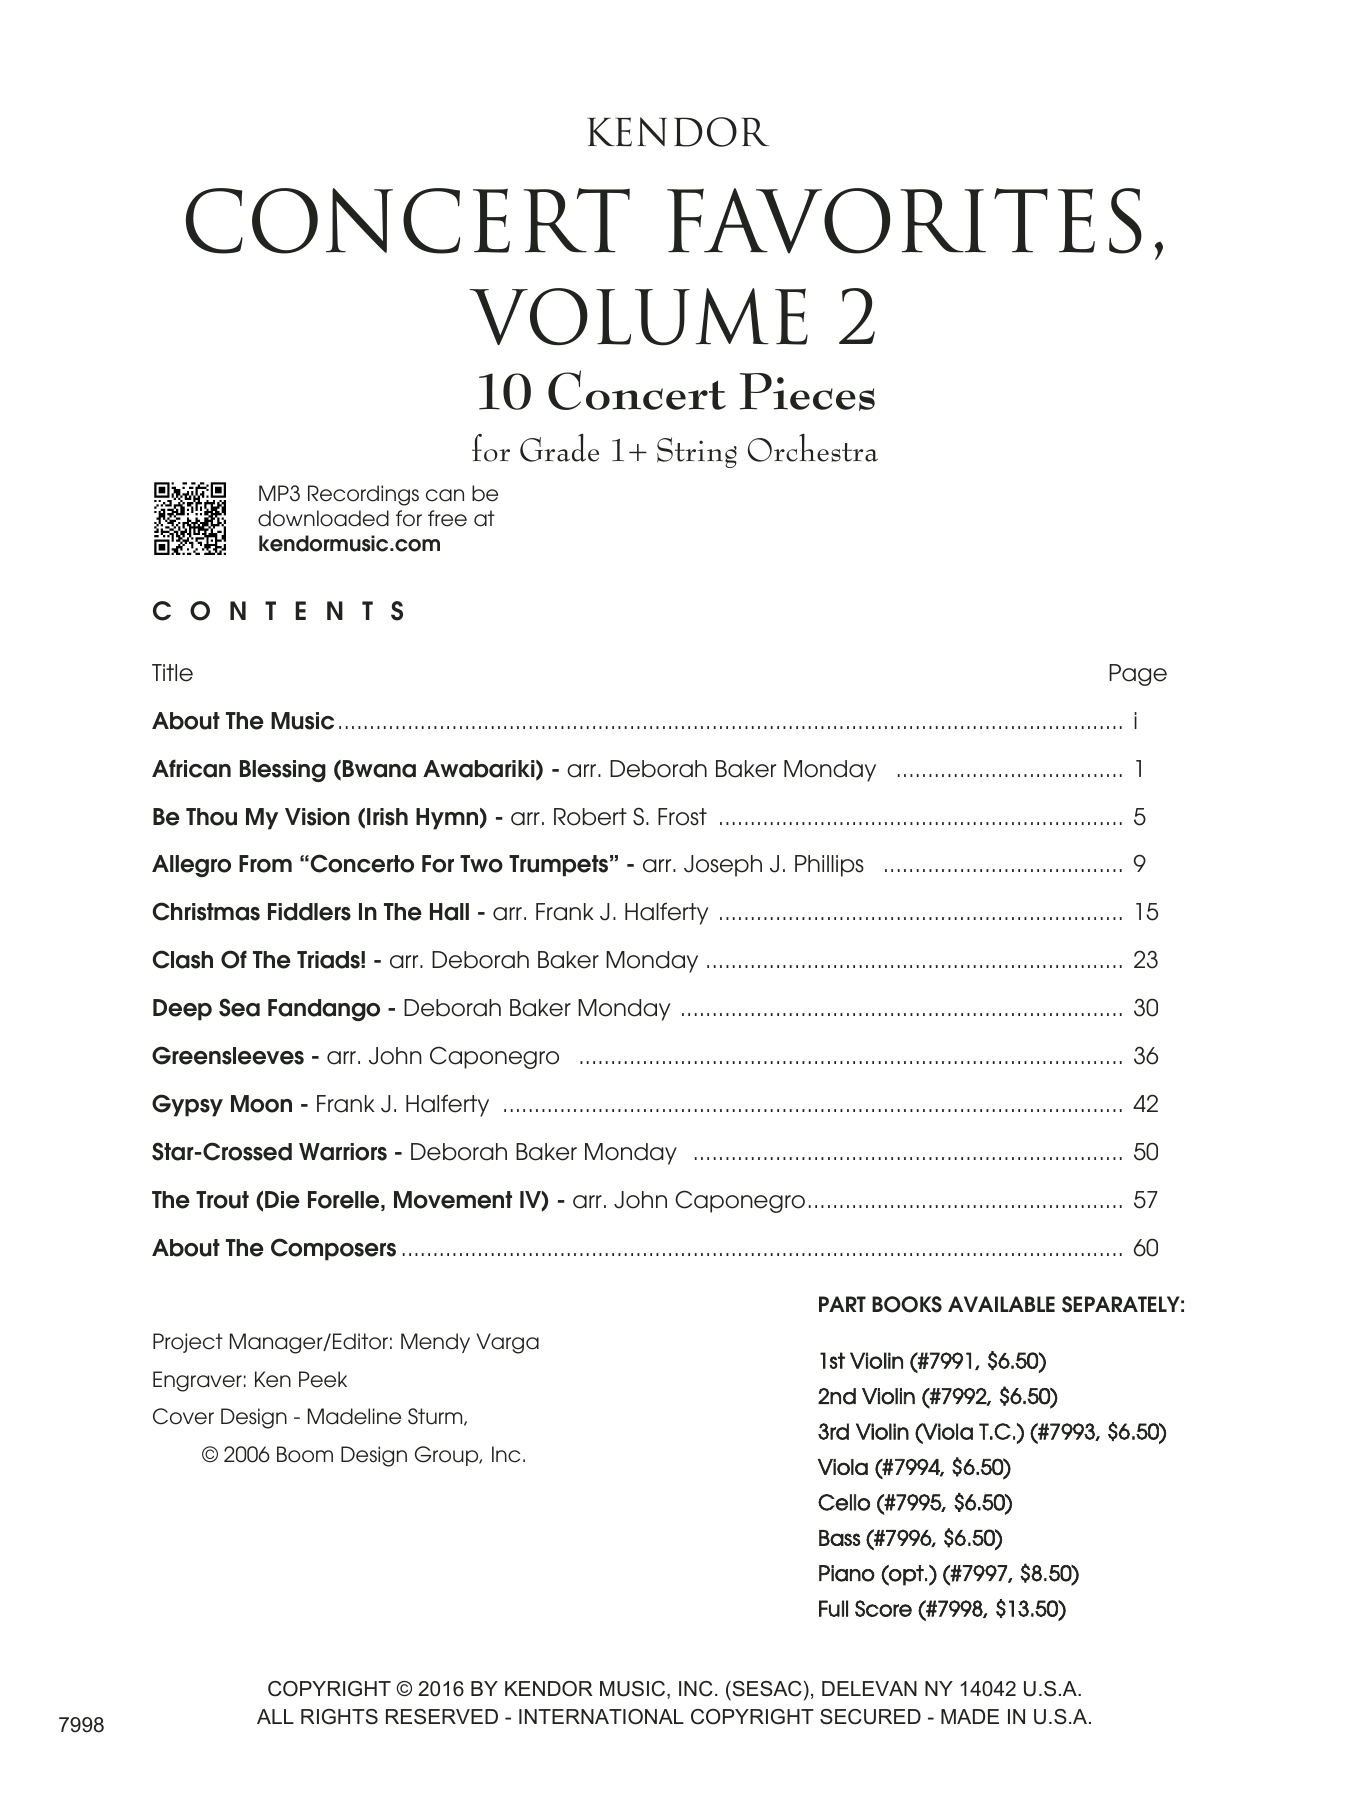 Download Various Kendor Concert Favorites, Volume 2 - Fu Sheet Music